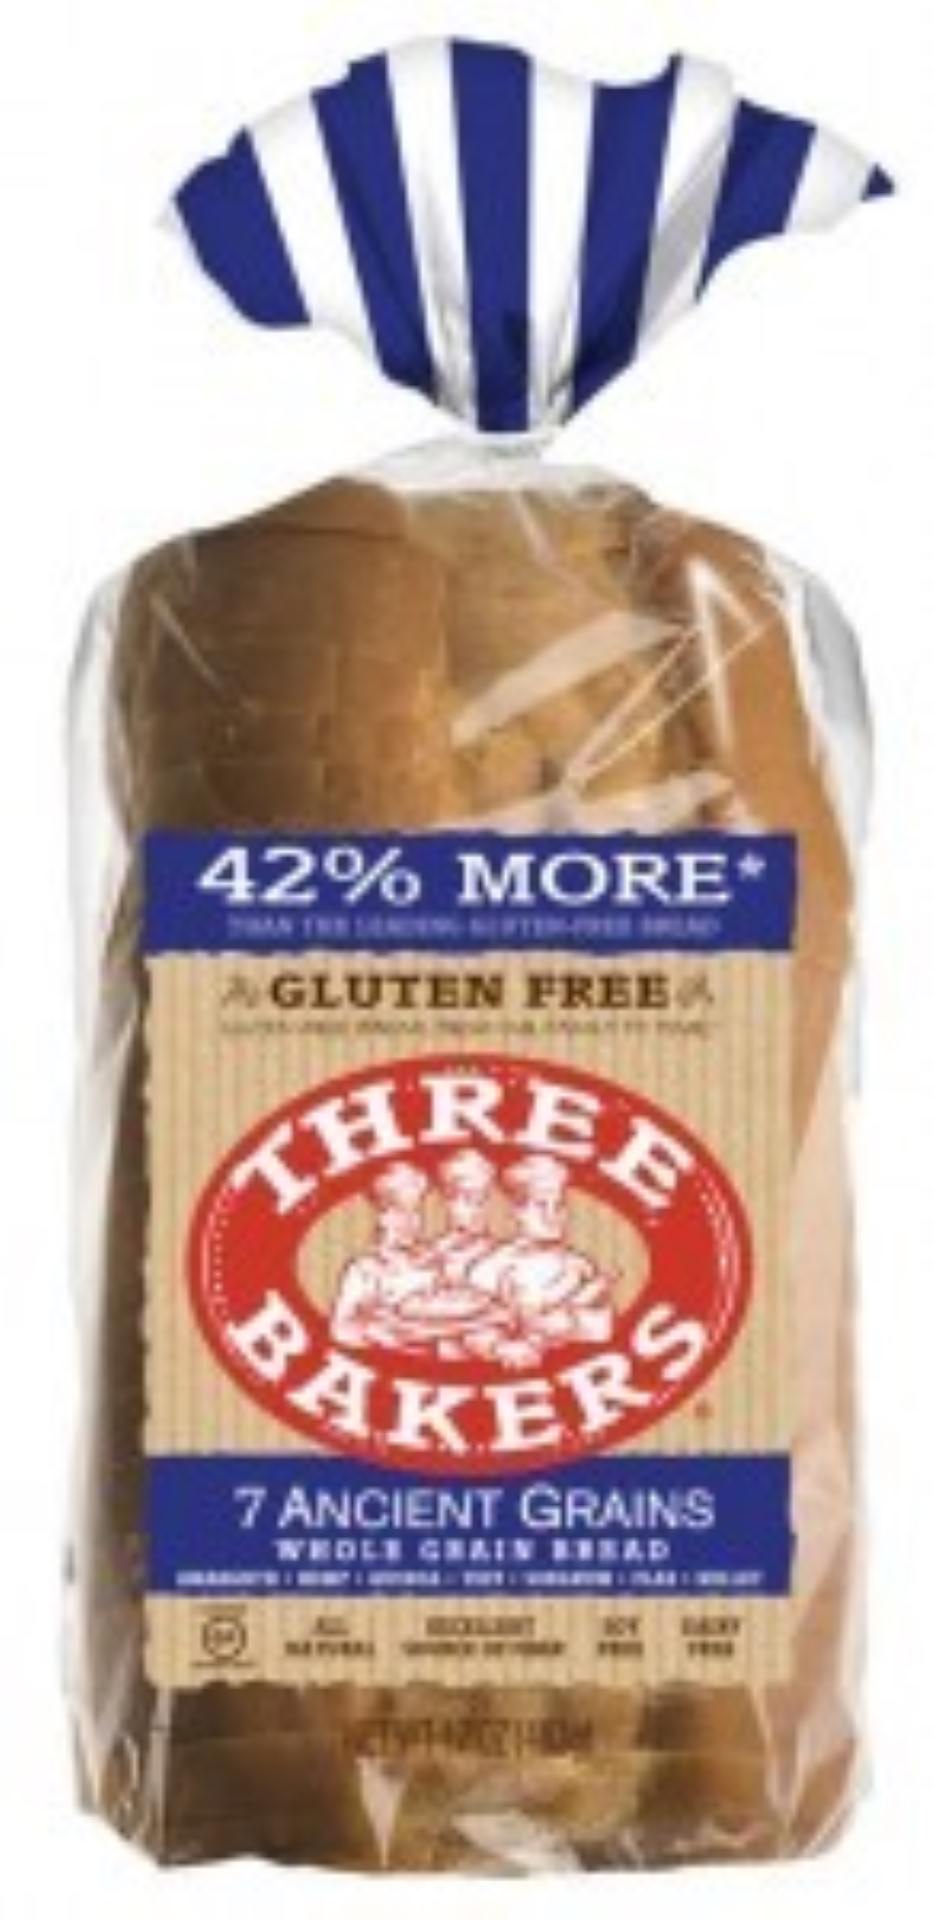 7 Ancient Grains Whole Grain Bread